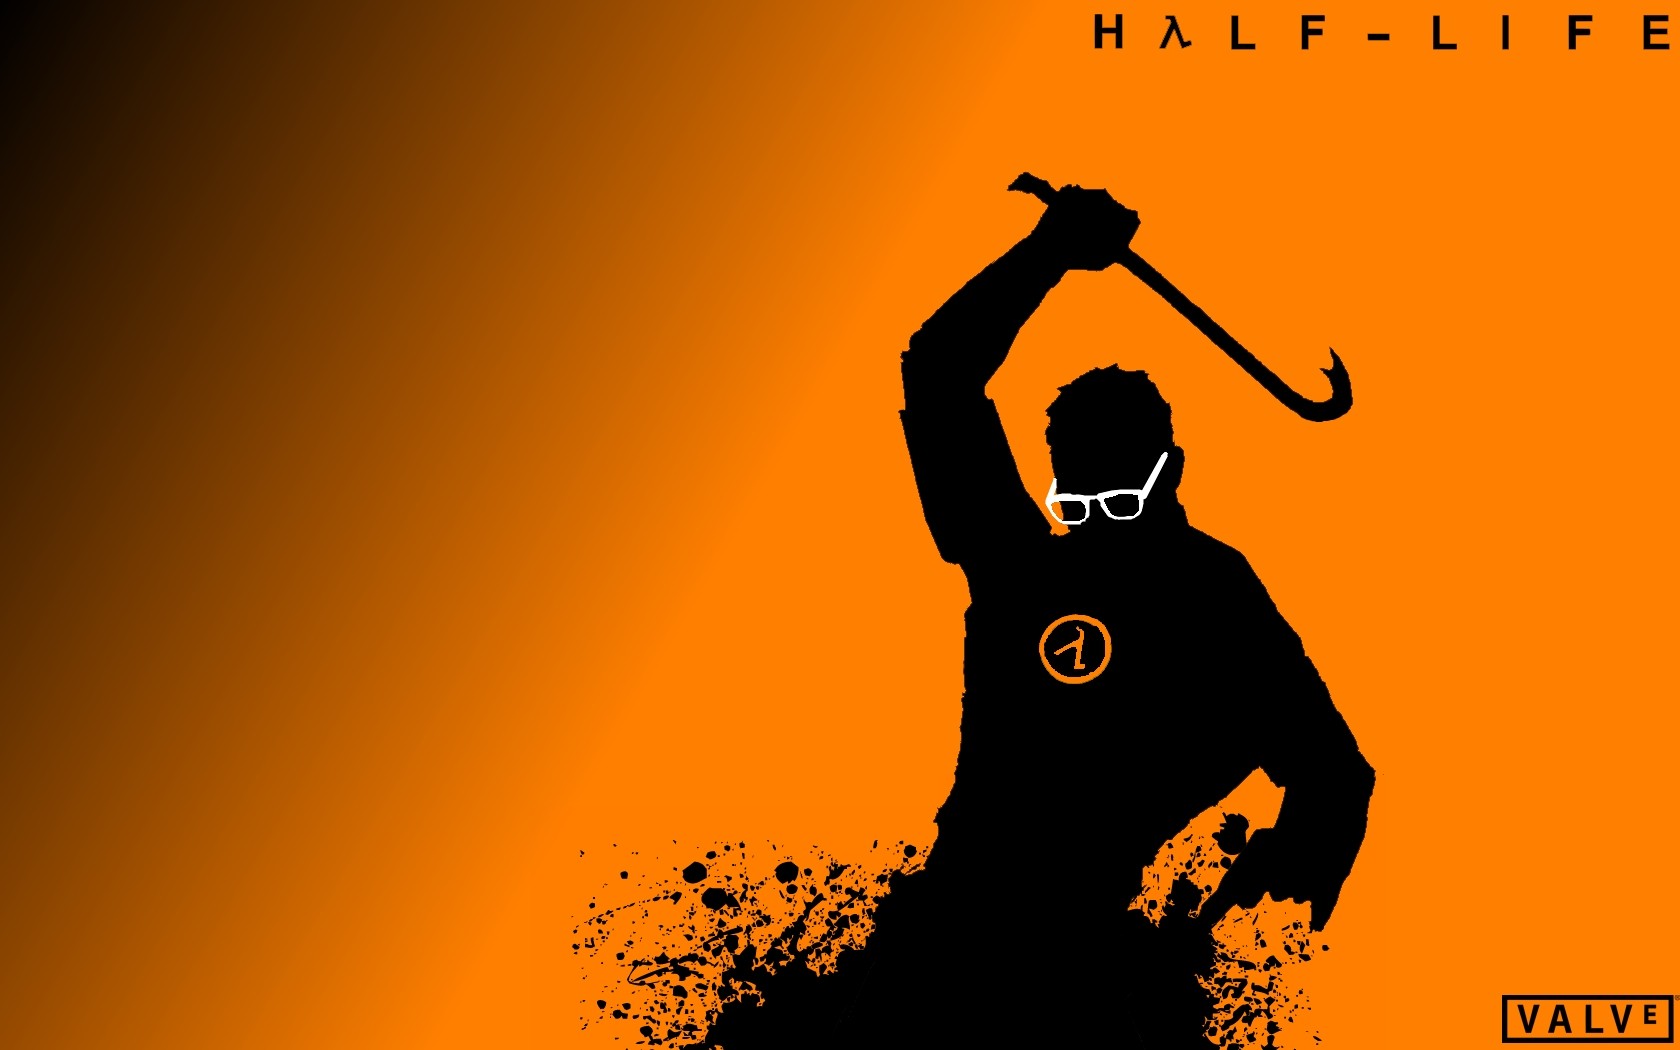 General 1680x1050 Half-Life Half-Life 2 Gordon Freeman video games video game characters fan art crowbar orange background simple background PC gaming Valve Corporation